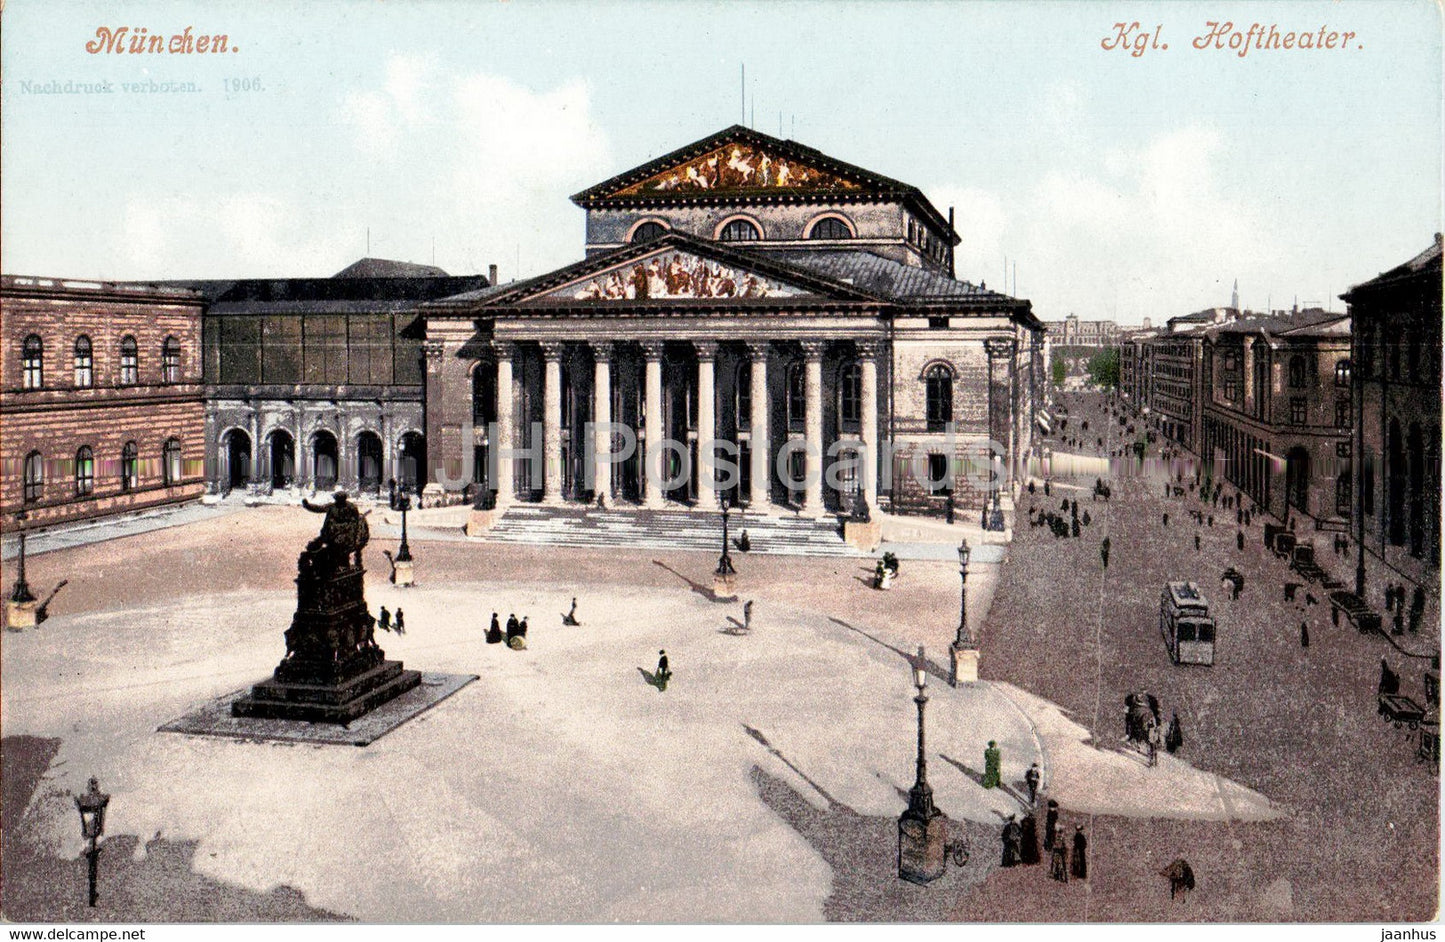 Munchen - Kgl Hoftheater - theatre - tram - 5 - old postcard - 1906 - Germany - unused - JH Postcards